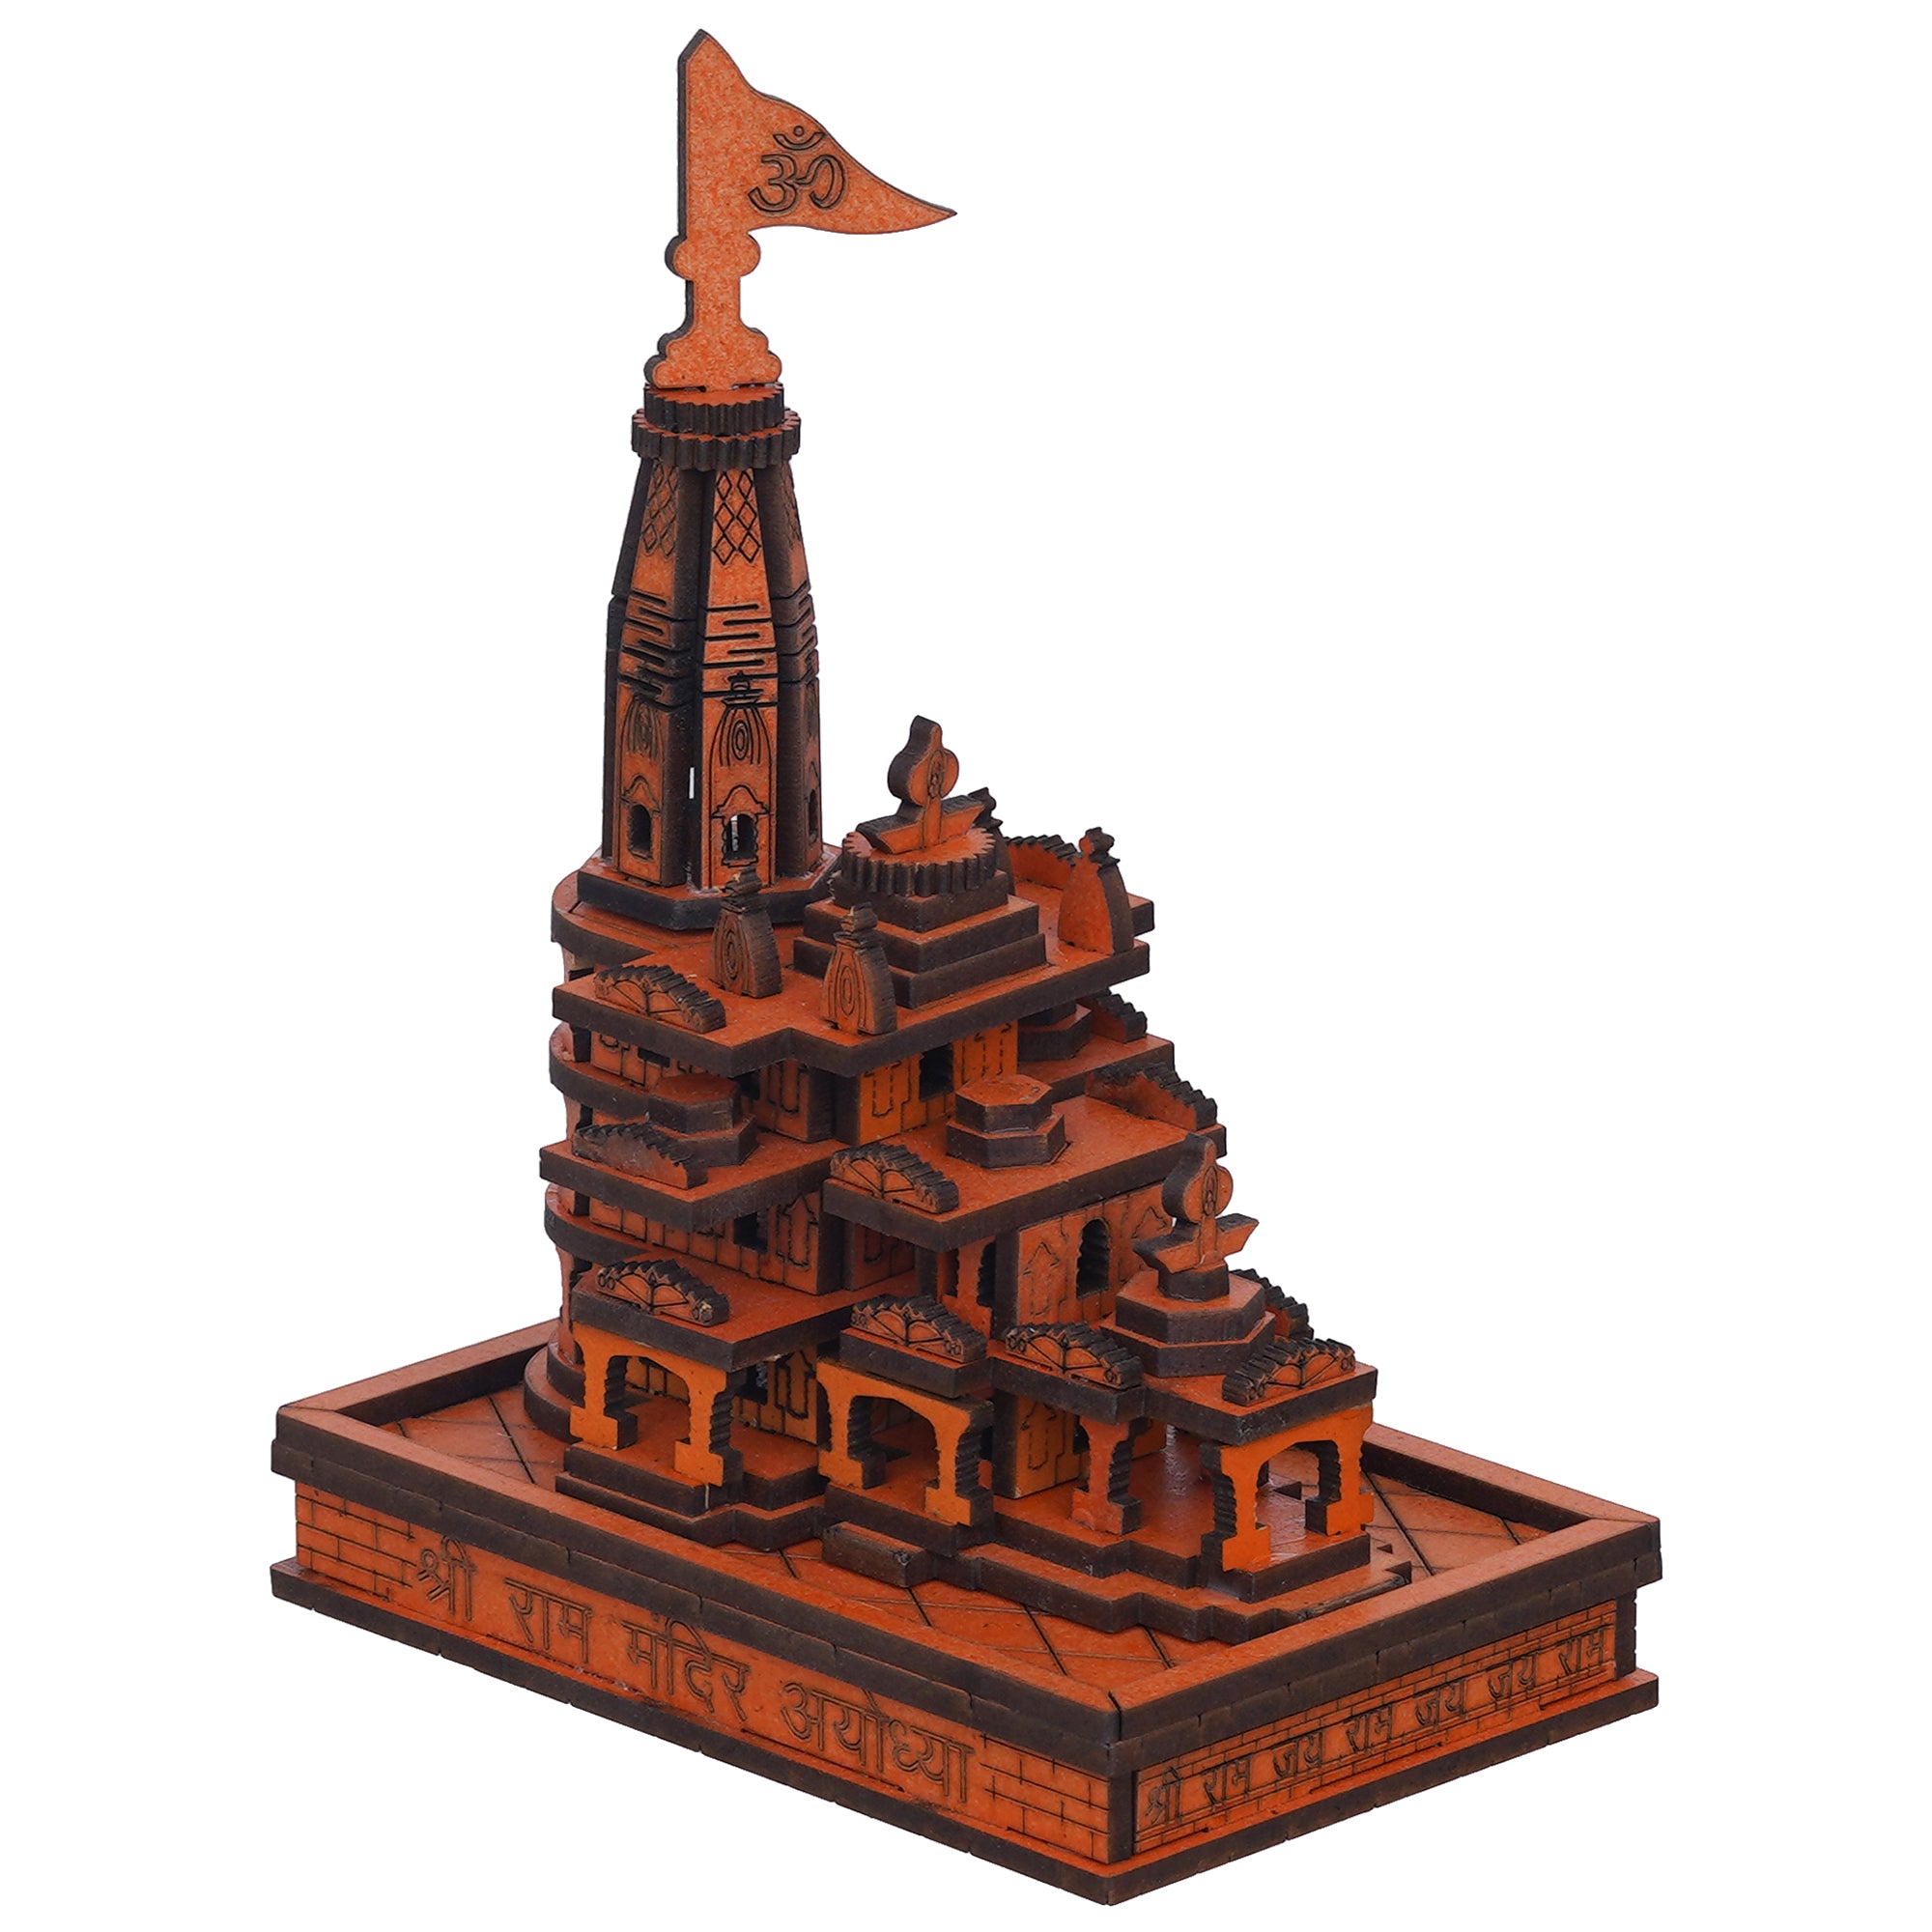 eCraftIndia Shri Ram Mandir Ayodhya Model - Wooden MDF Craftsmanship Authentic Designer Temple - Ideal for Home Temple, Decor, and Spiritual Gifting (Orange, Brown) 2